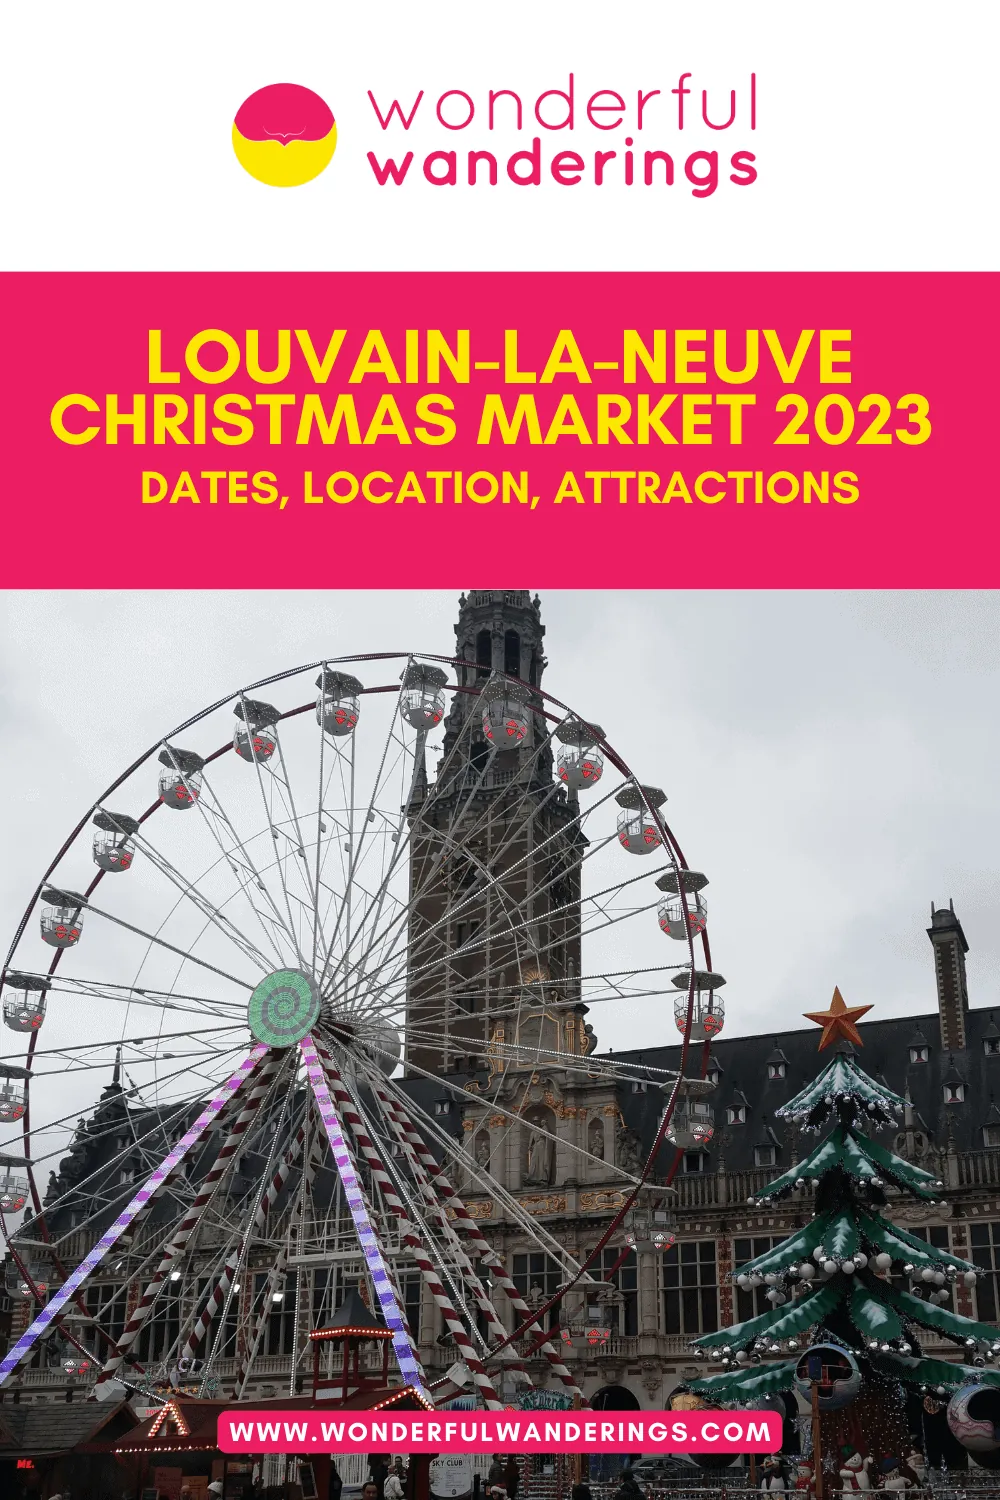 Louvain-la-Neuve Pinterest image